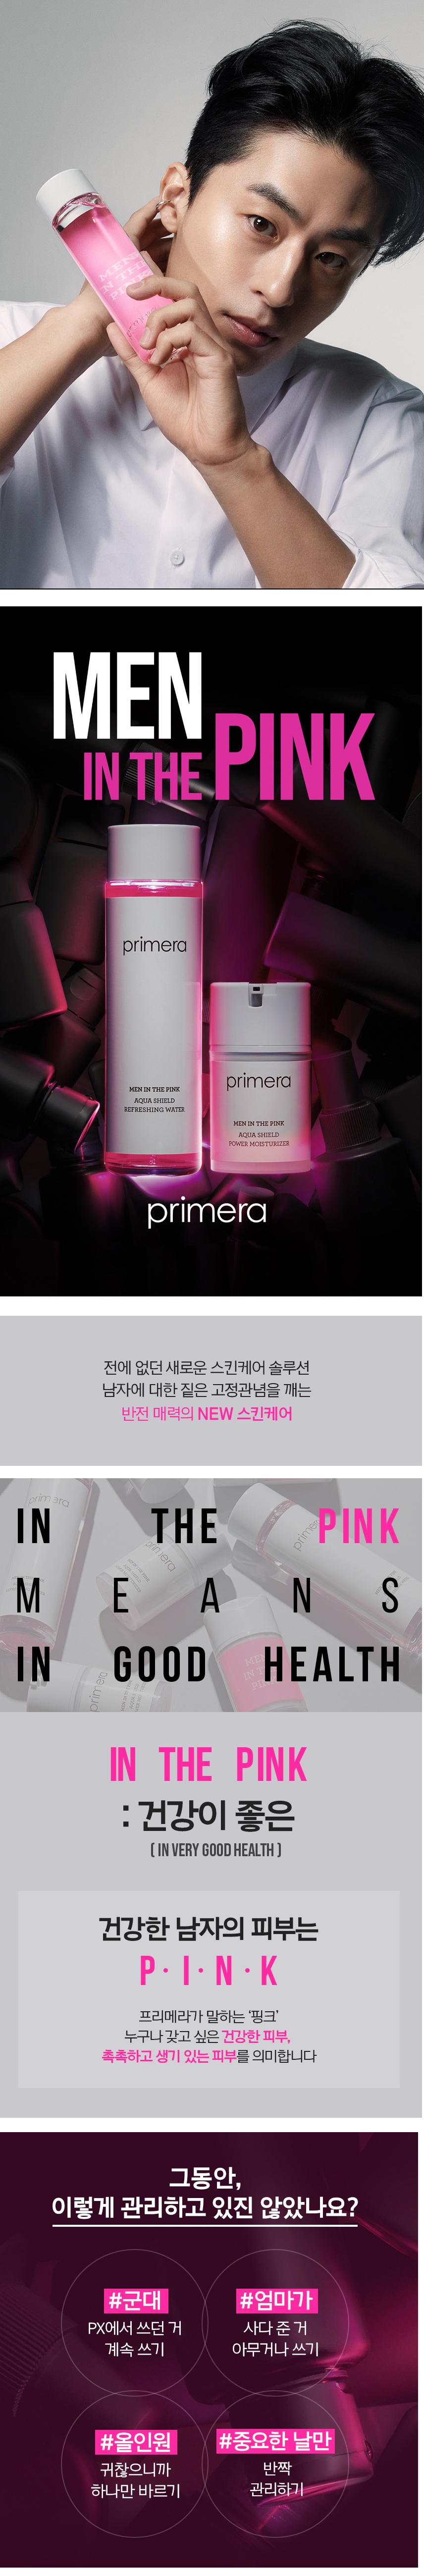 primera Men In The Pink Aqua Shield Refreshing Water korean skincare product onlien shop malaysia India Thailand1